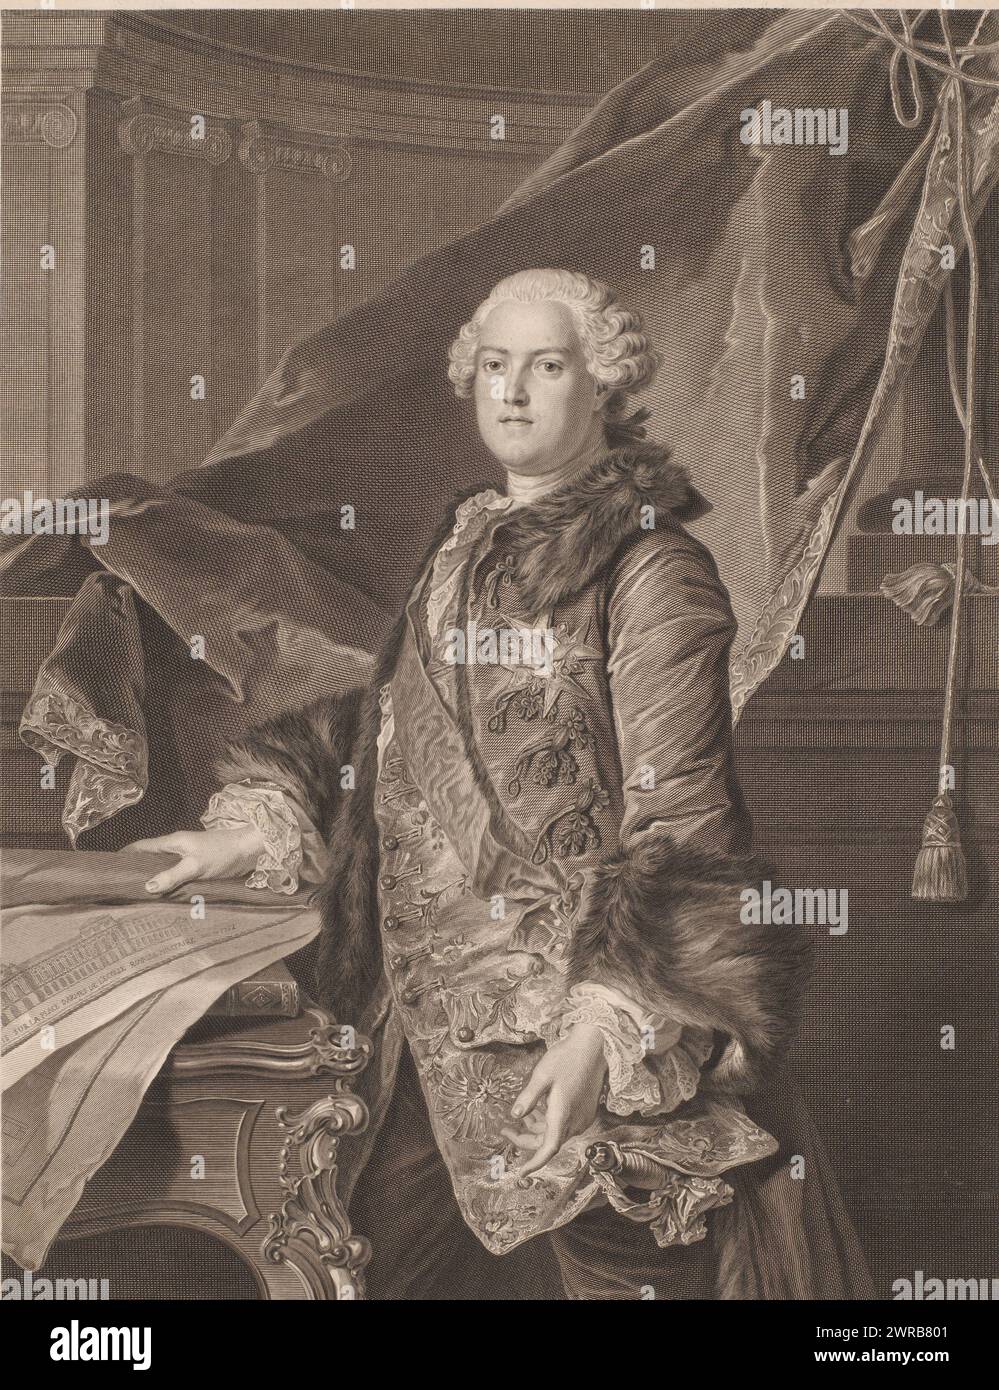 Portrait of Abel François Poisson de Vandières, print maker: Johann Georg Wille, after painting by: Louis Tocqué, 1761, paper, engraving, etching, height 492 mm × width 344 mm, print Stock Photo